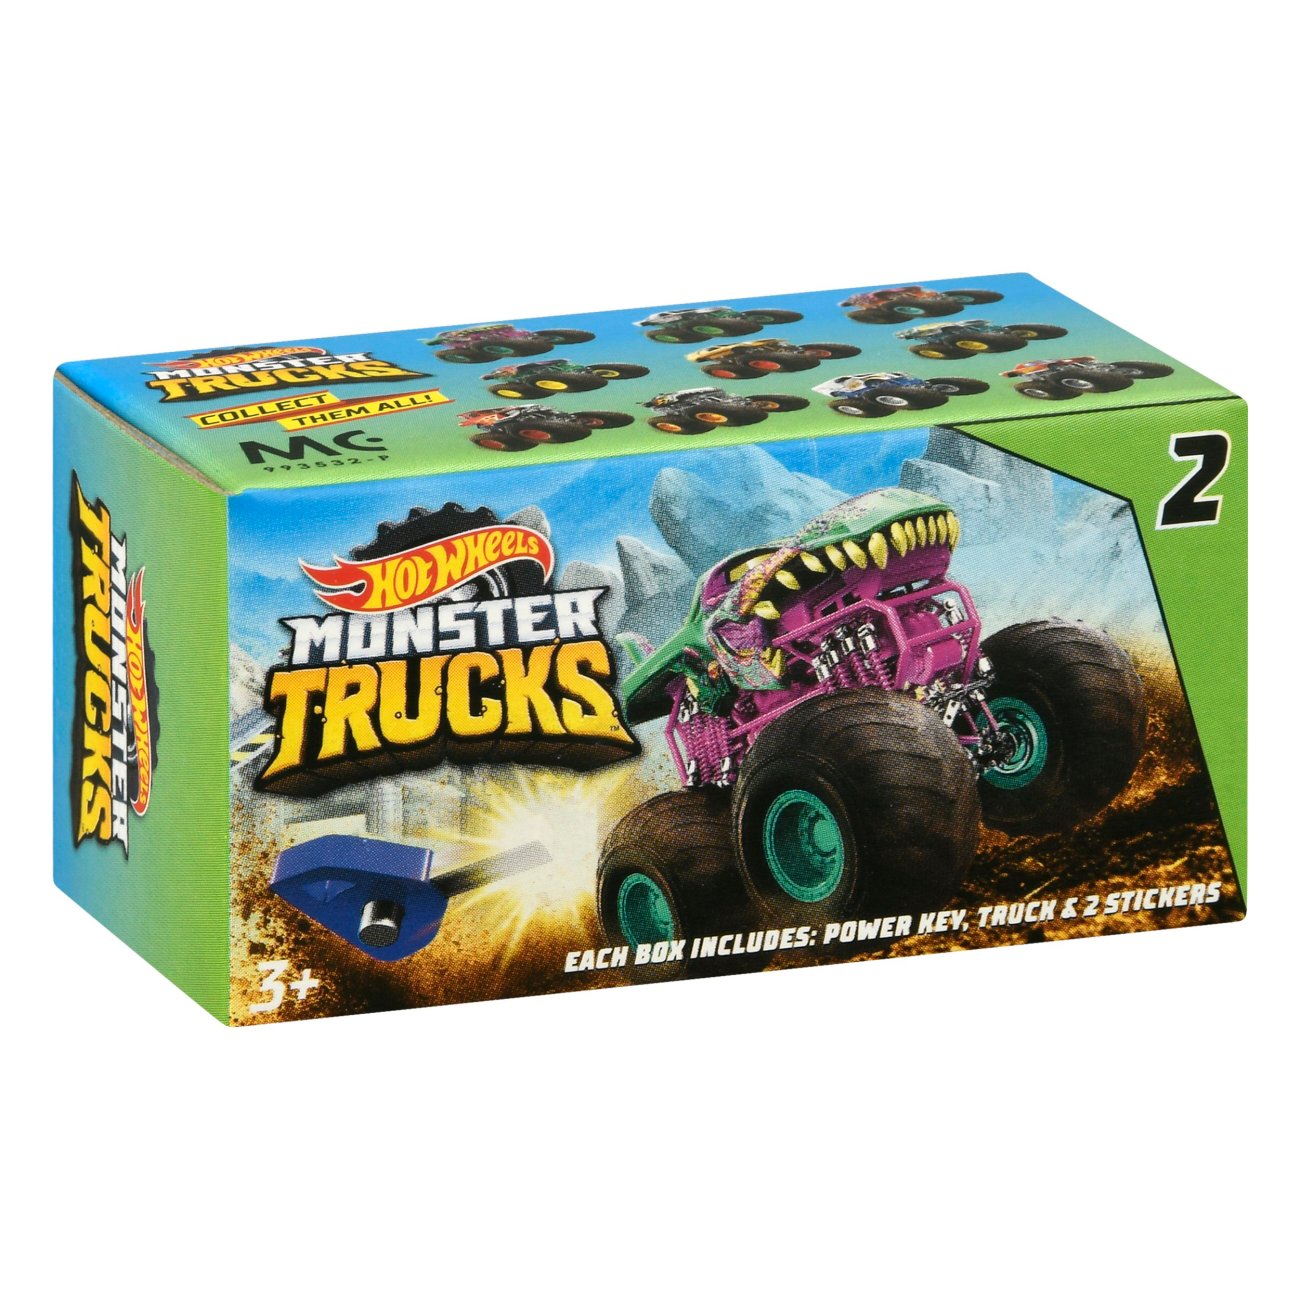 gebruiker Buskruit onderhoud Hot Wheels Monster Trucks Mystery Vehicle - Shop Toy Vehicles at H-E-B